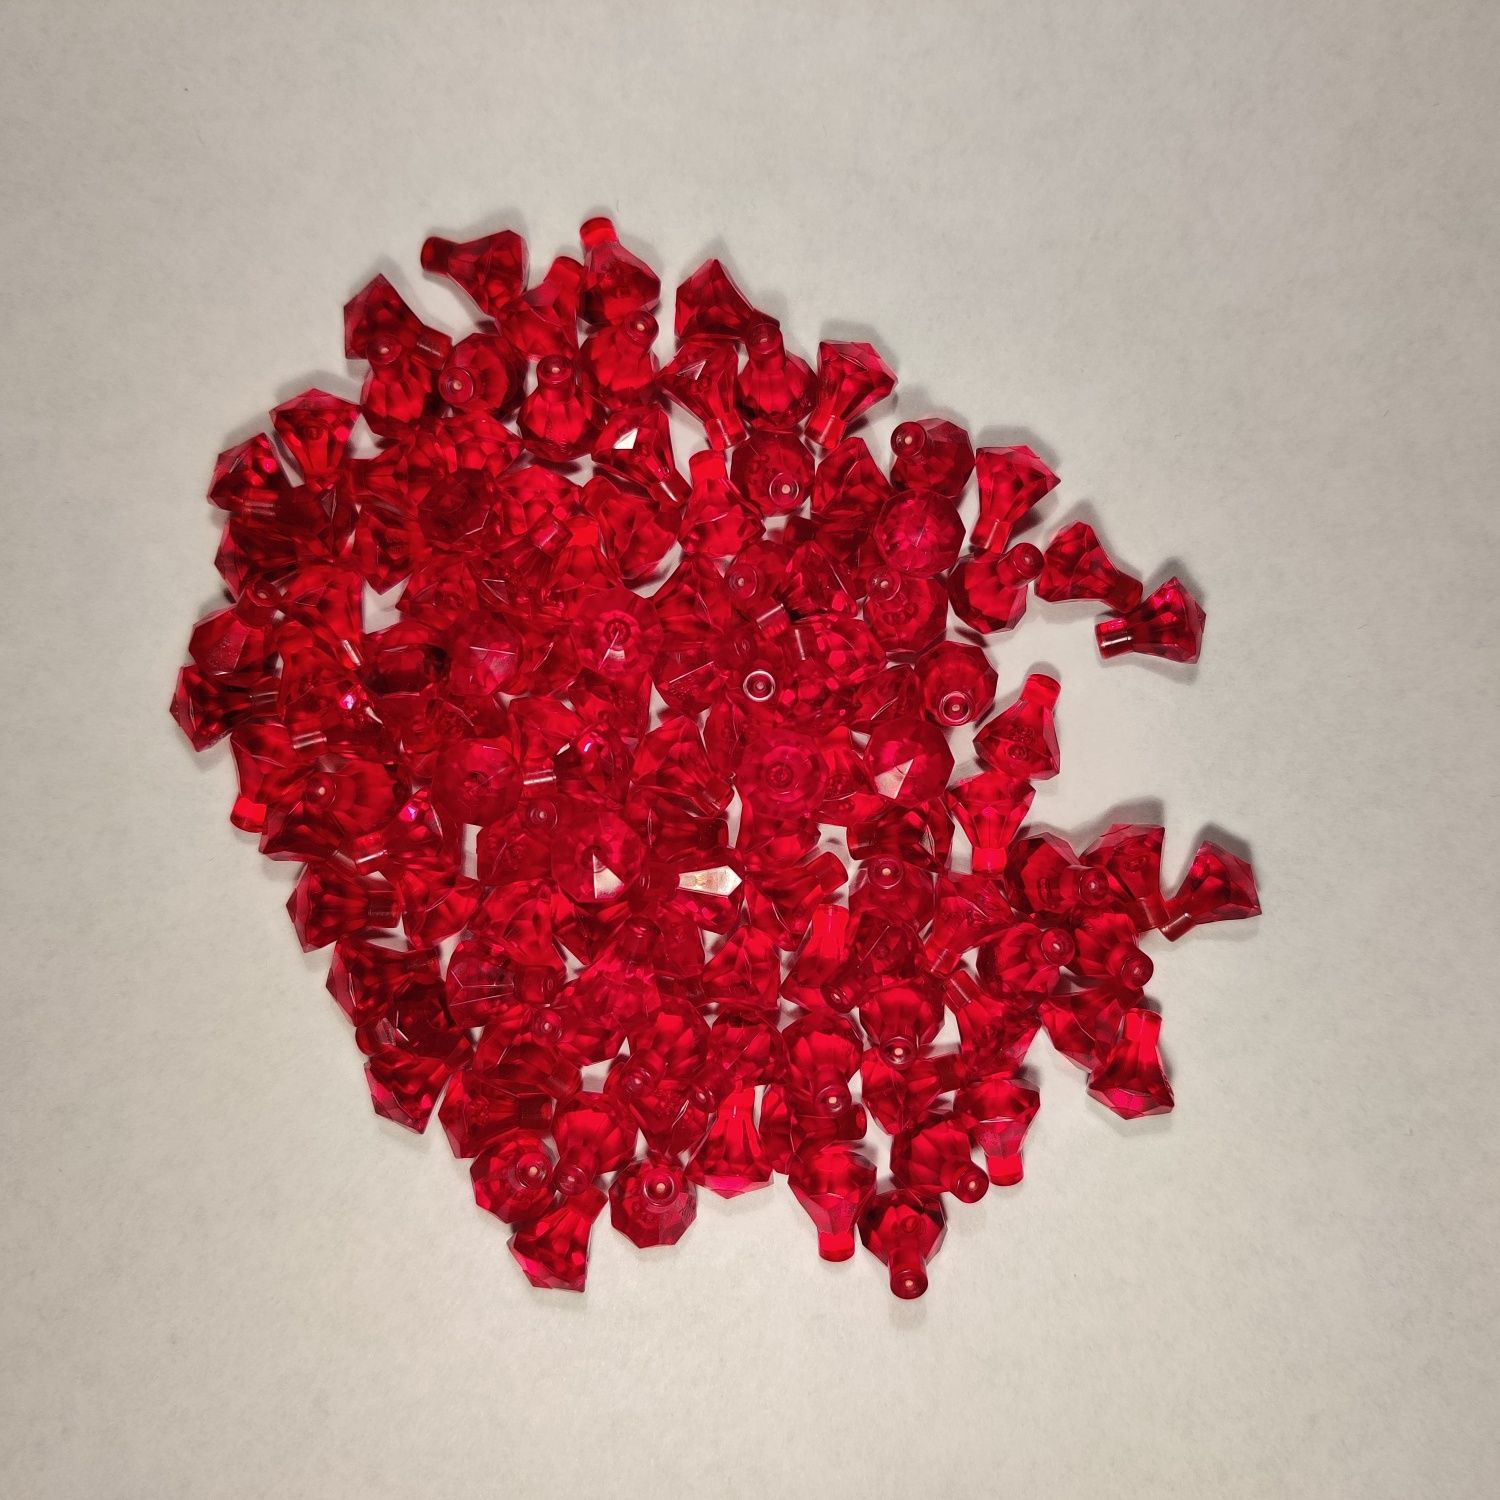 LEGO diamenty/kryształy - 25 sztuk - czerwone - elementy mix